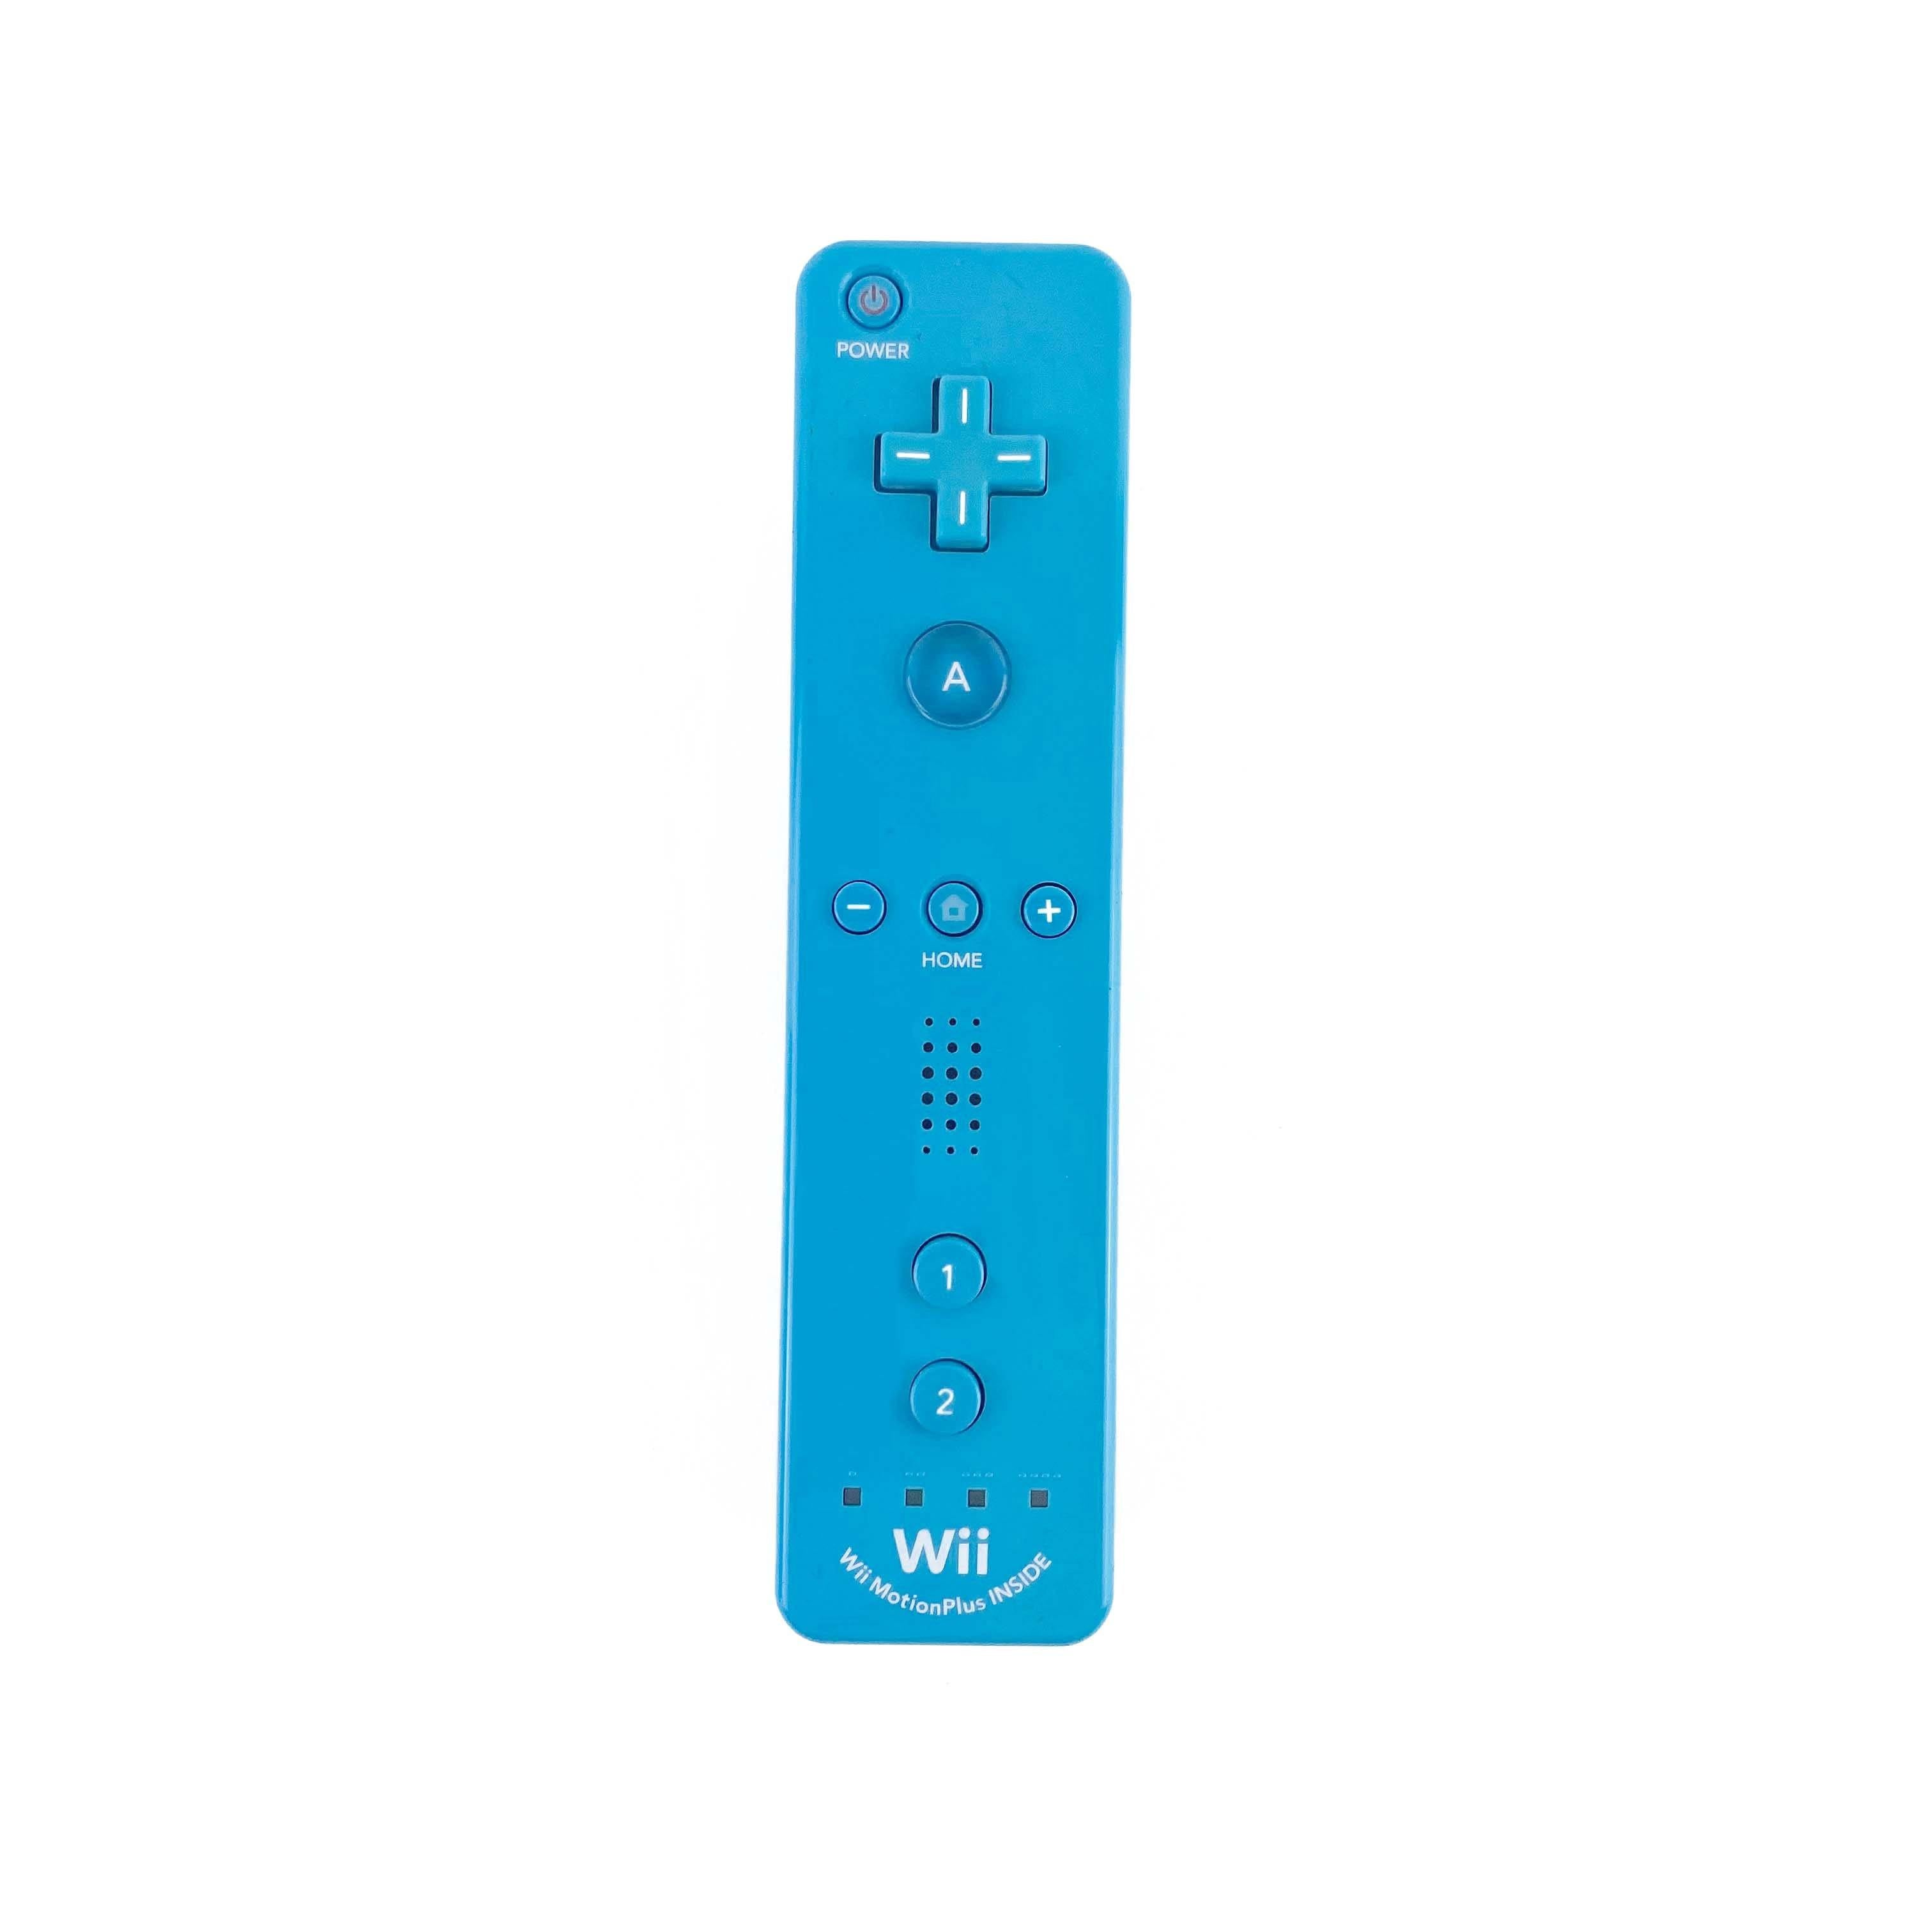 Nintendo Wii Blue Teal Console Bundle (RVL-101)